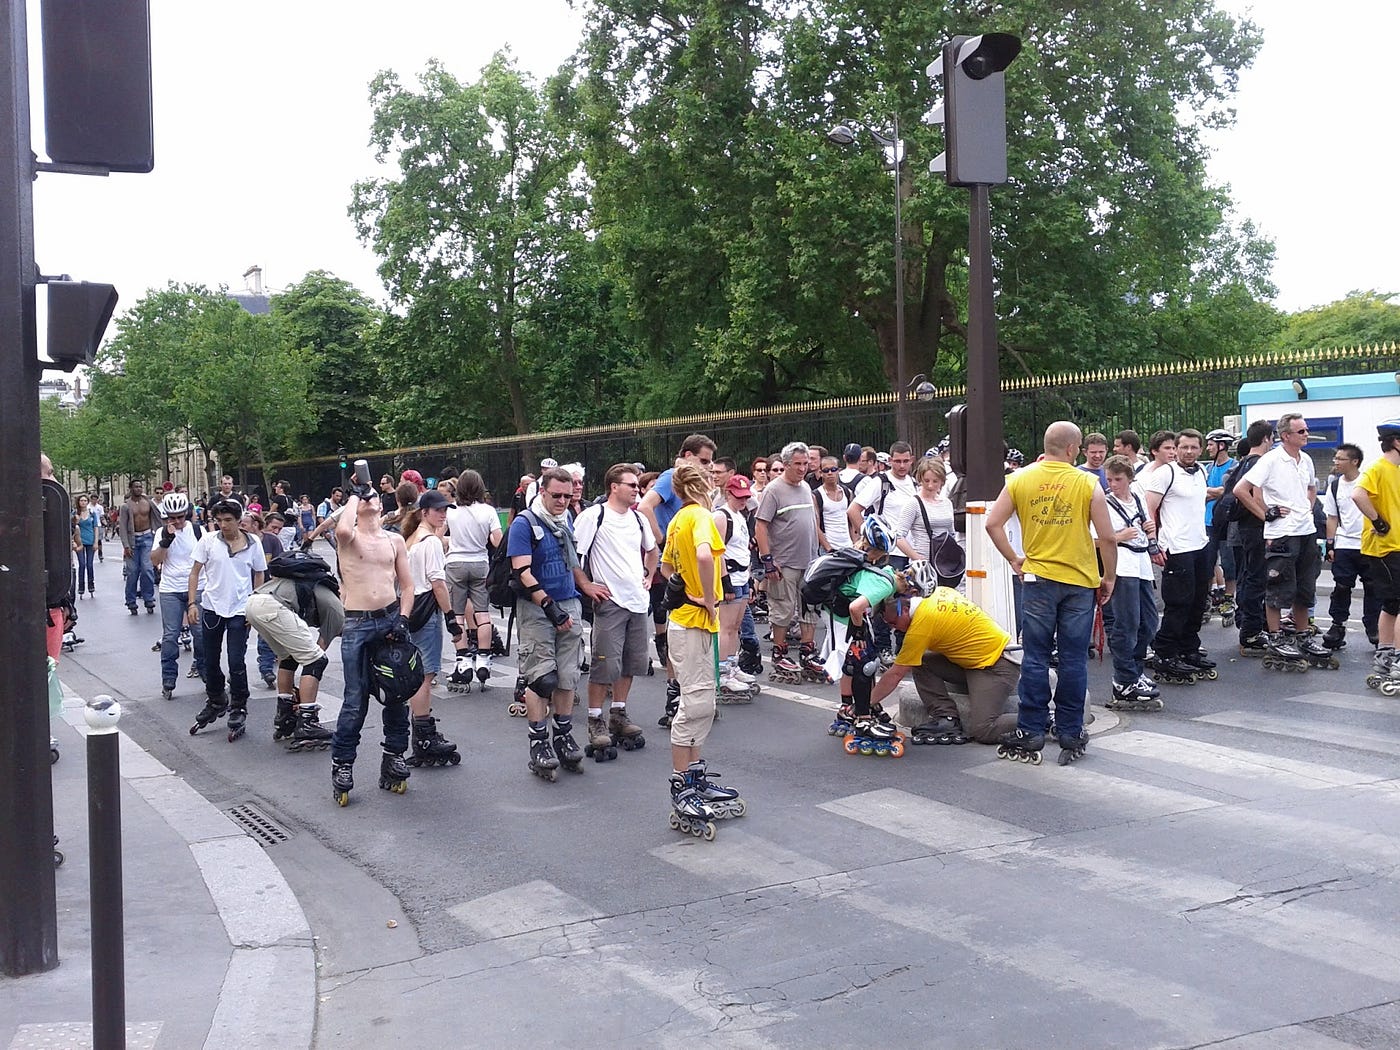 The 14-mile Sunday Skate in Paris | by Michael Morrissey | Medium